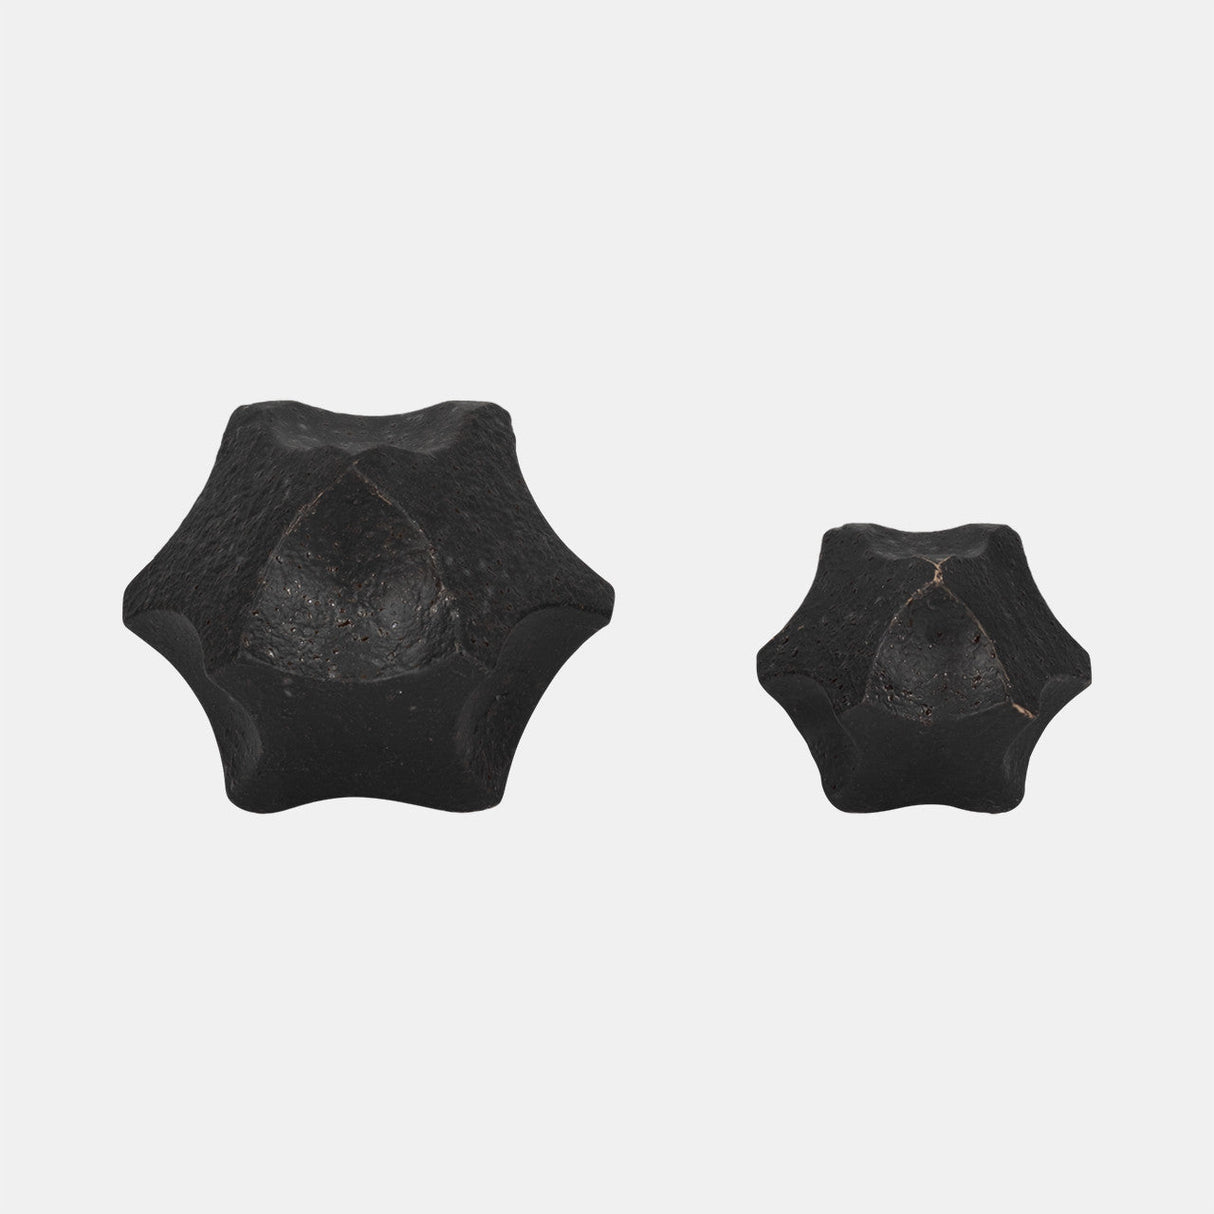 5" Textured Geometric Orb, Black